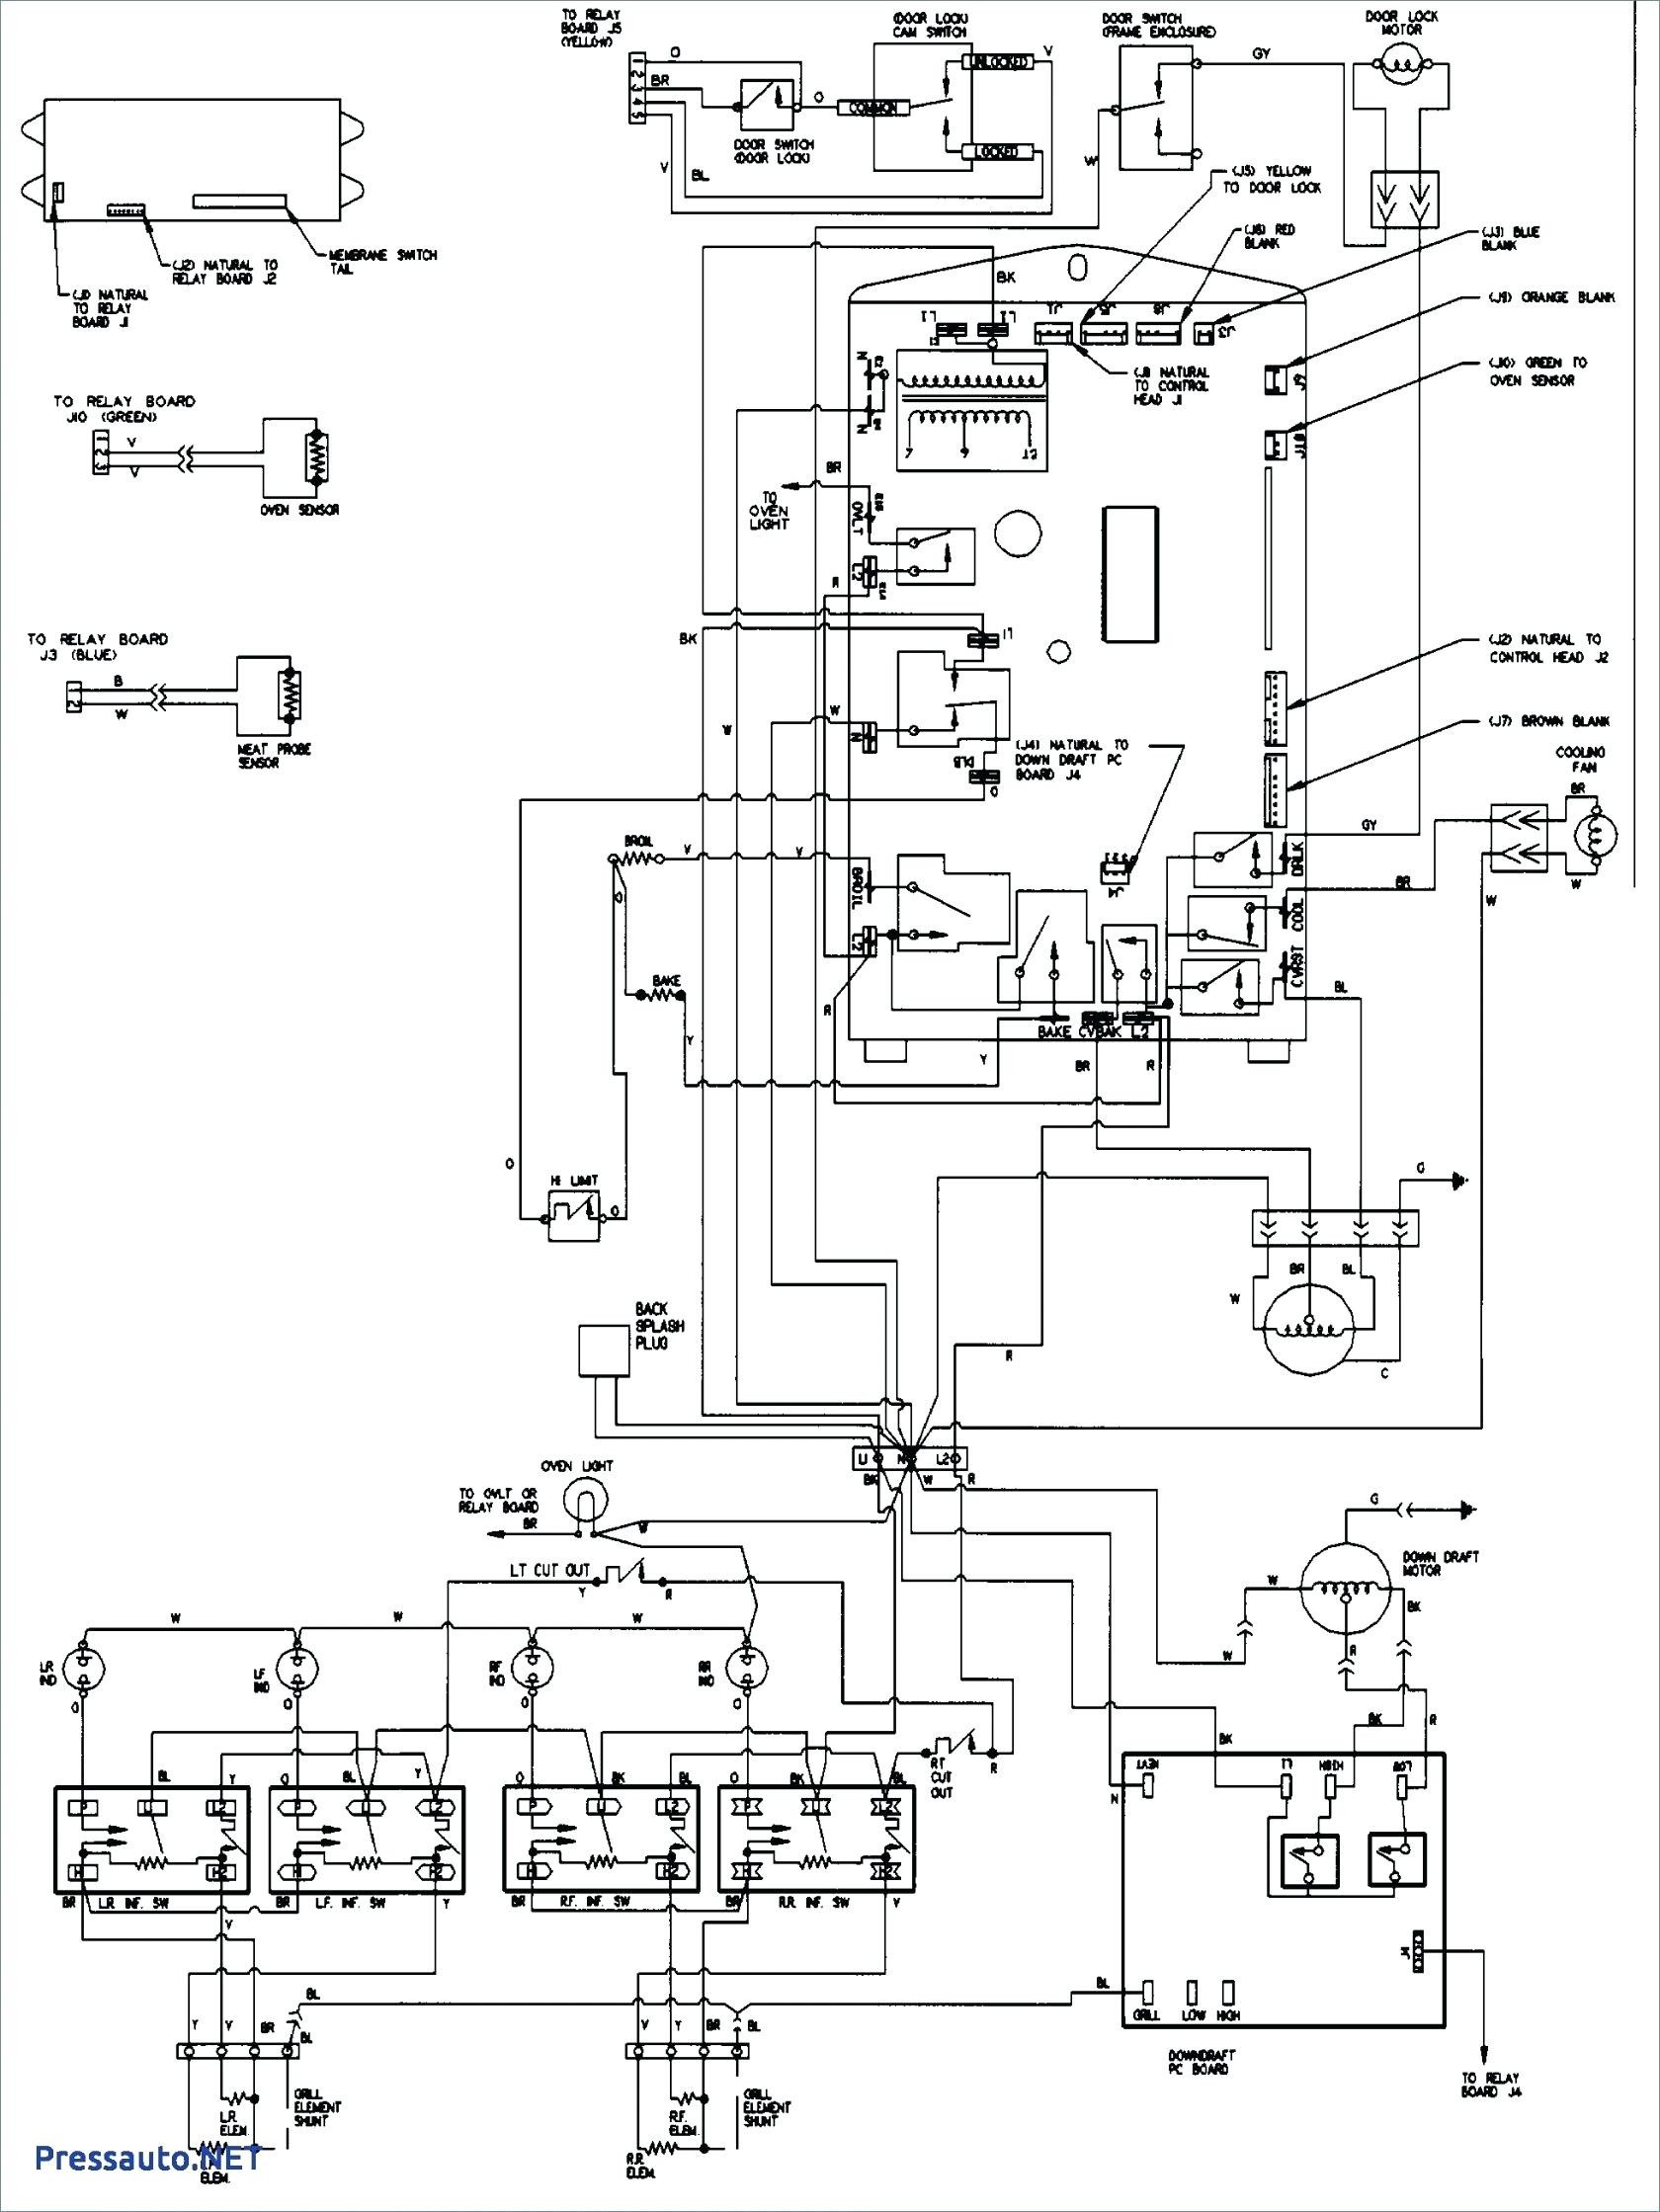 Wiring A Ac thermostat Diagram Best Lennox Ac Wiring Diagram Lennox Condenser Unit Wiring Diagram